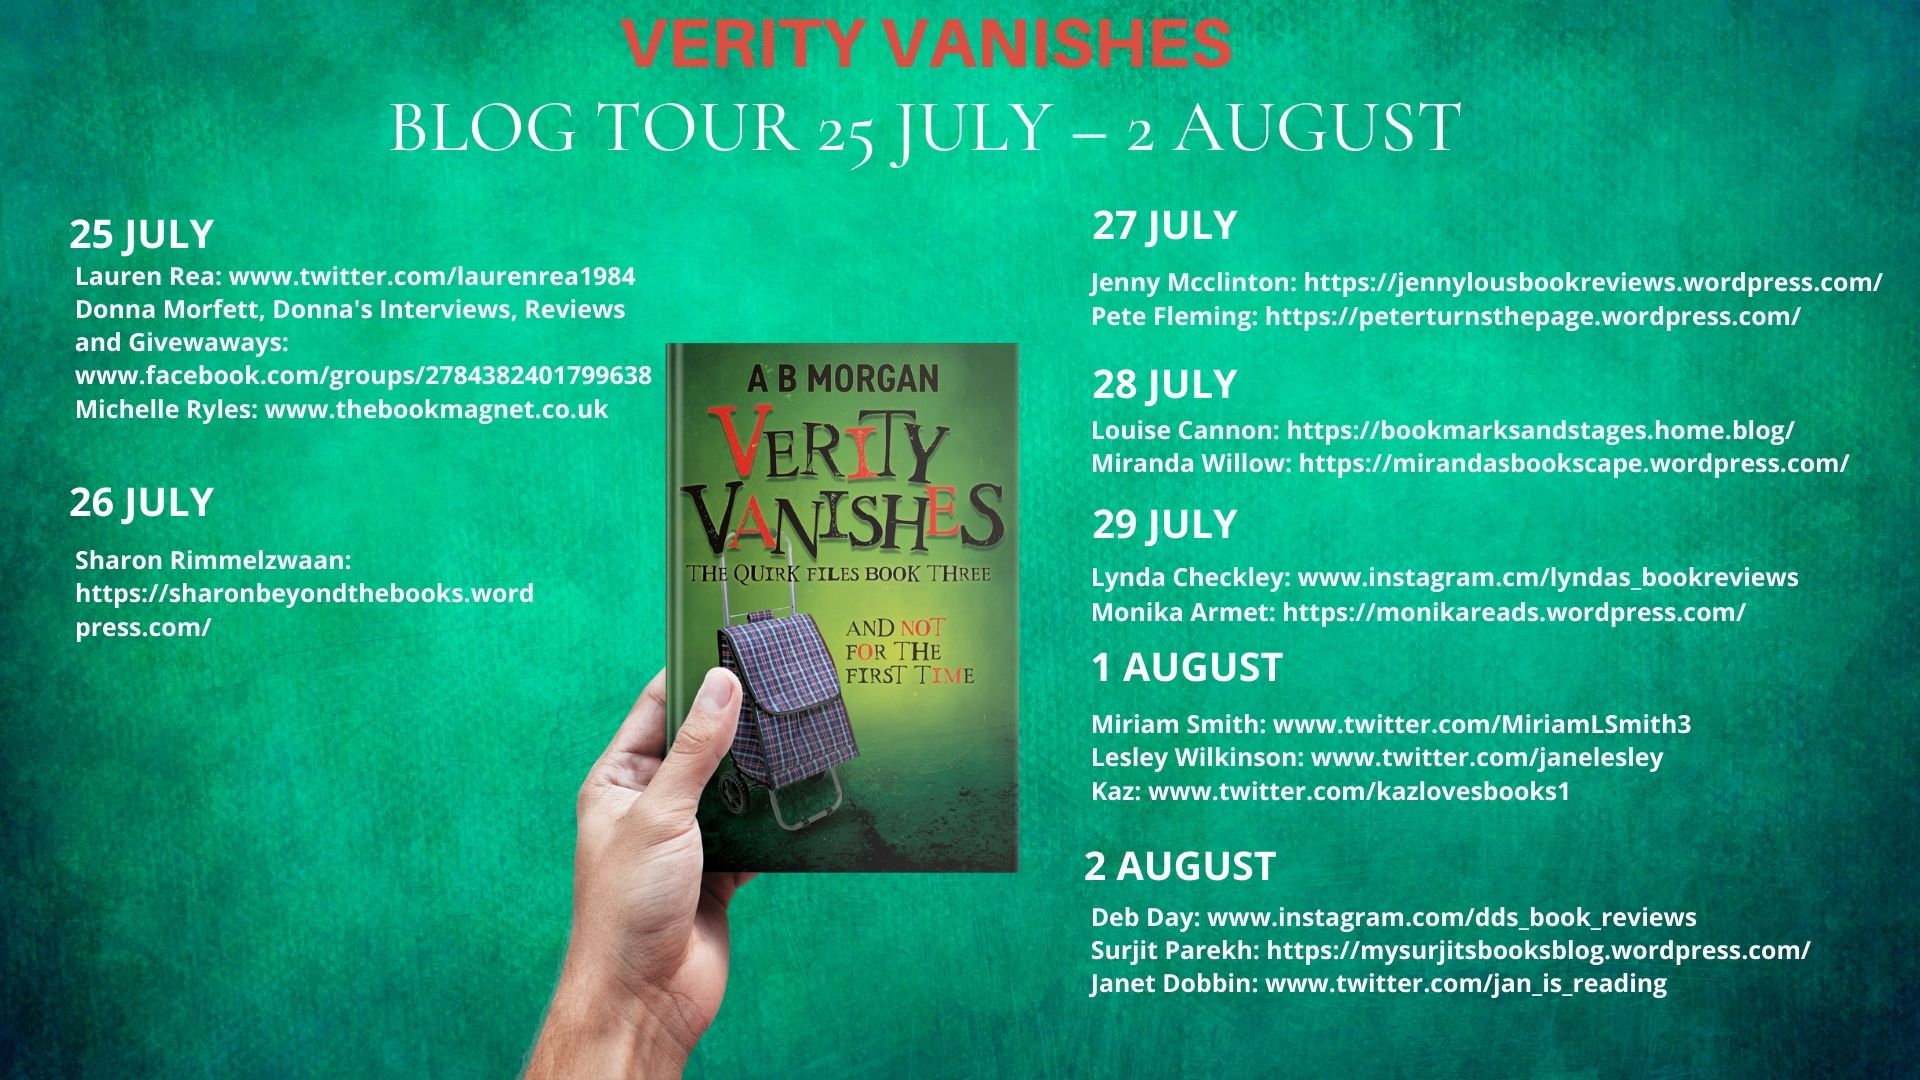 Verity Vanishes2 Blog Tour